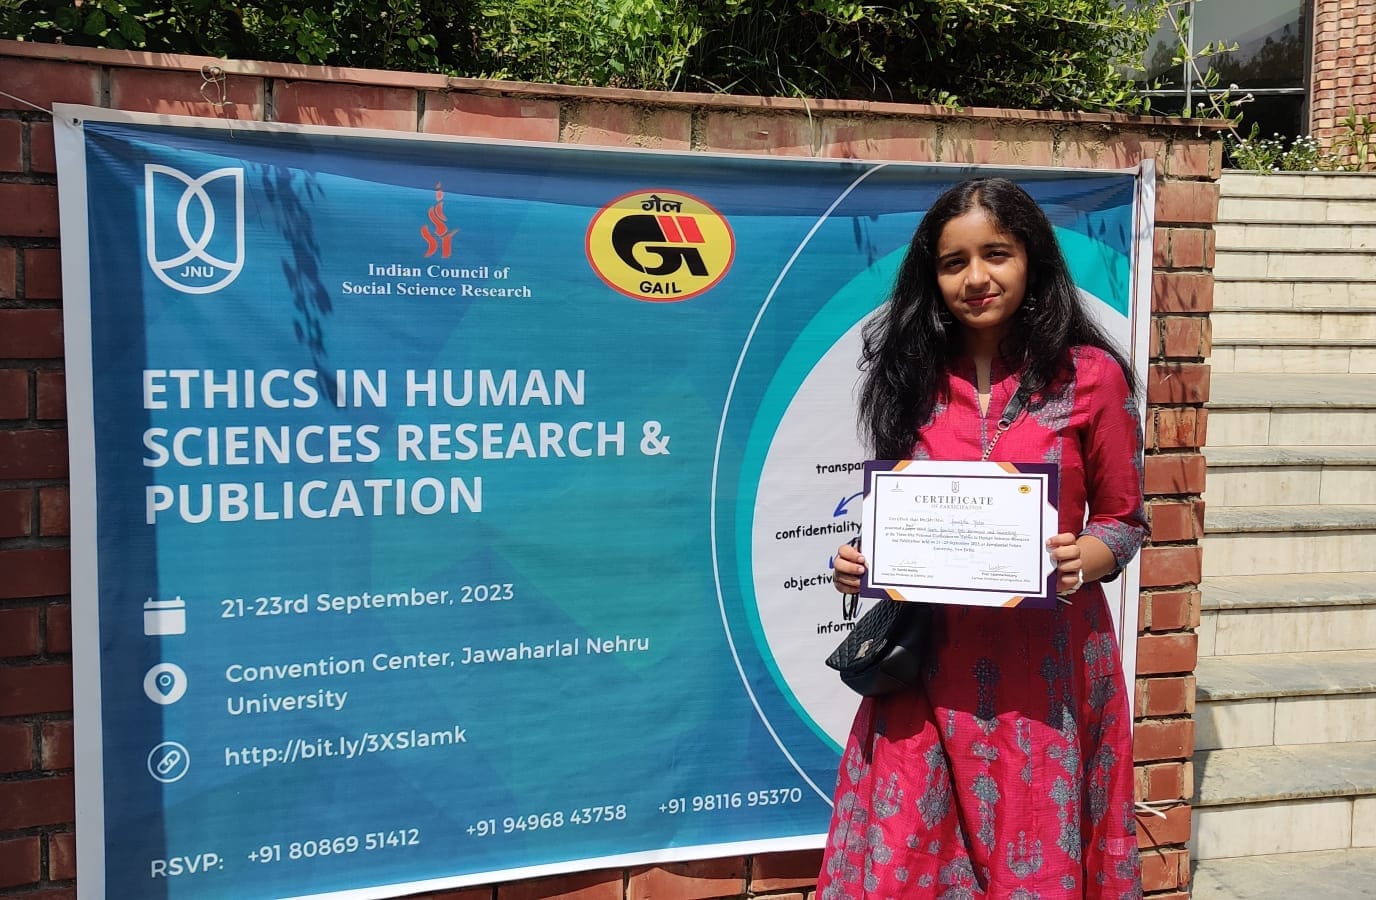 “Ryan International School Celebrates Student Success: Samiksha Yadav’s Research on Cancer Genetics Published!”